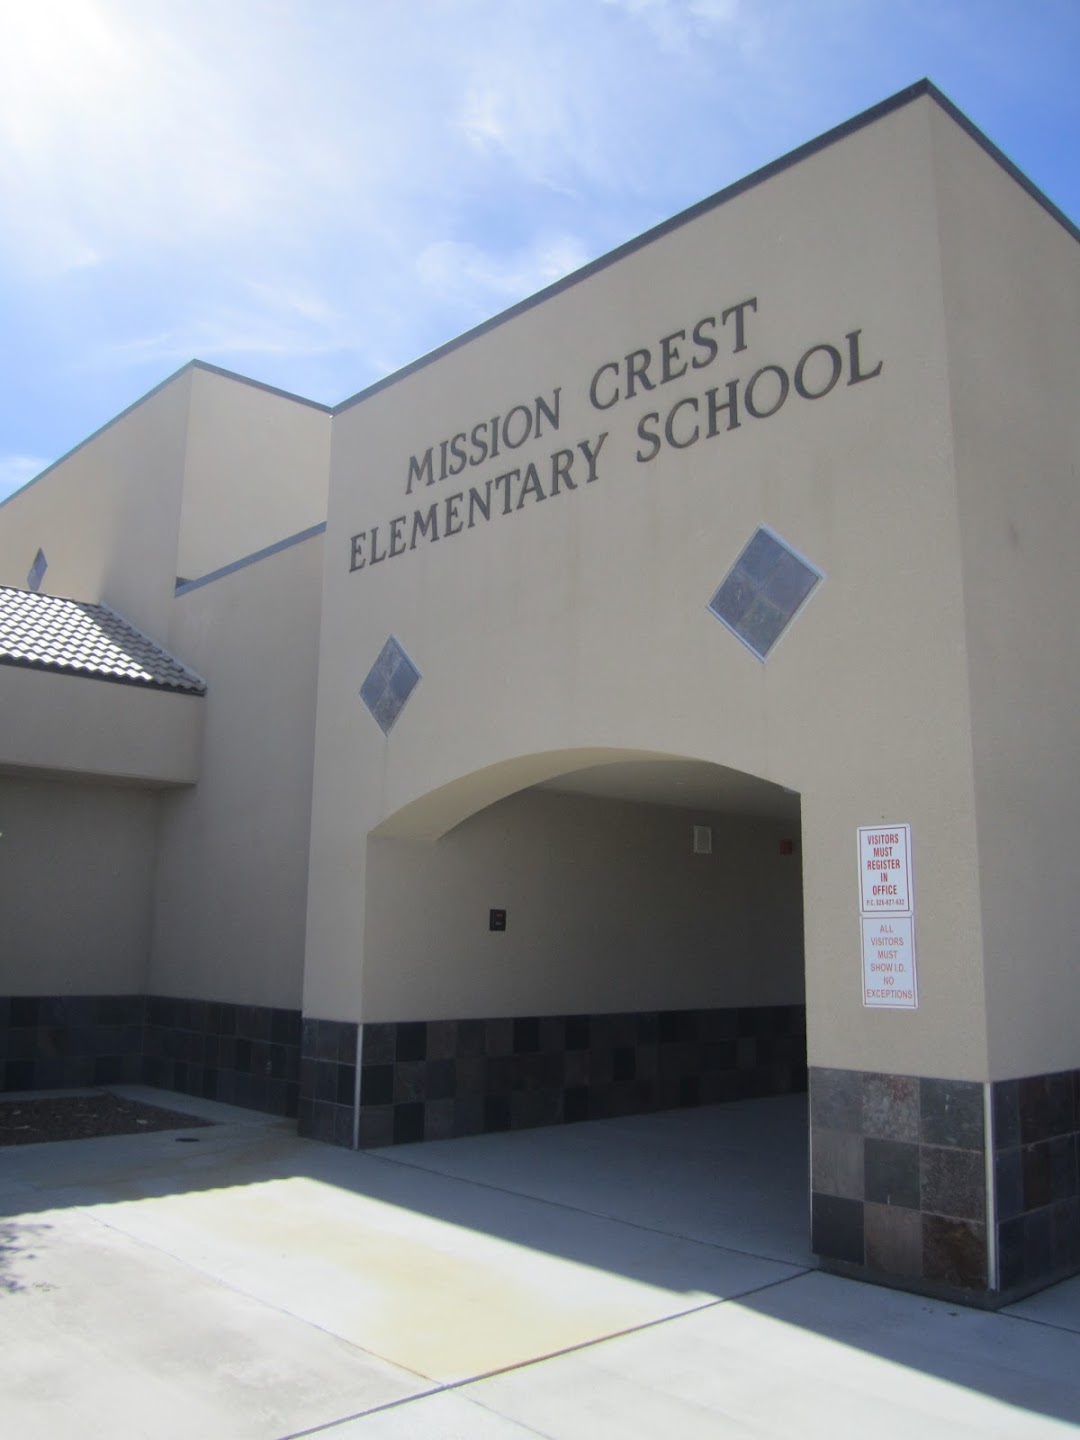 Mission Crest Elementary School